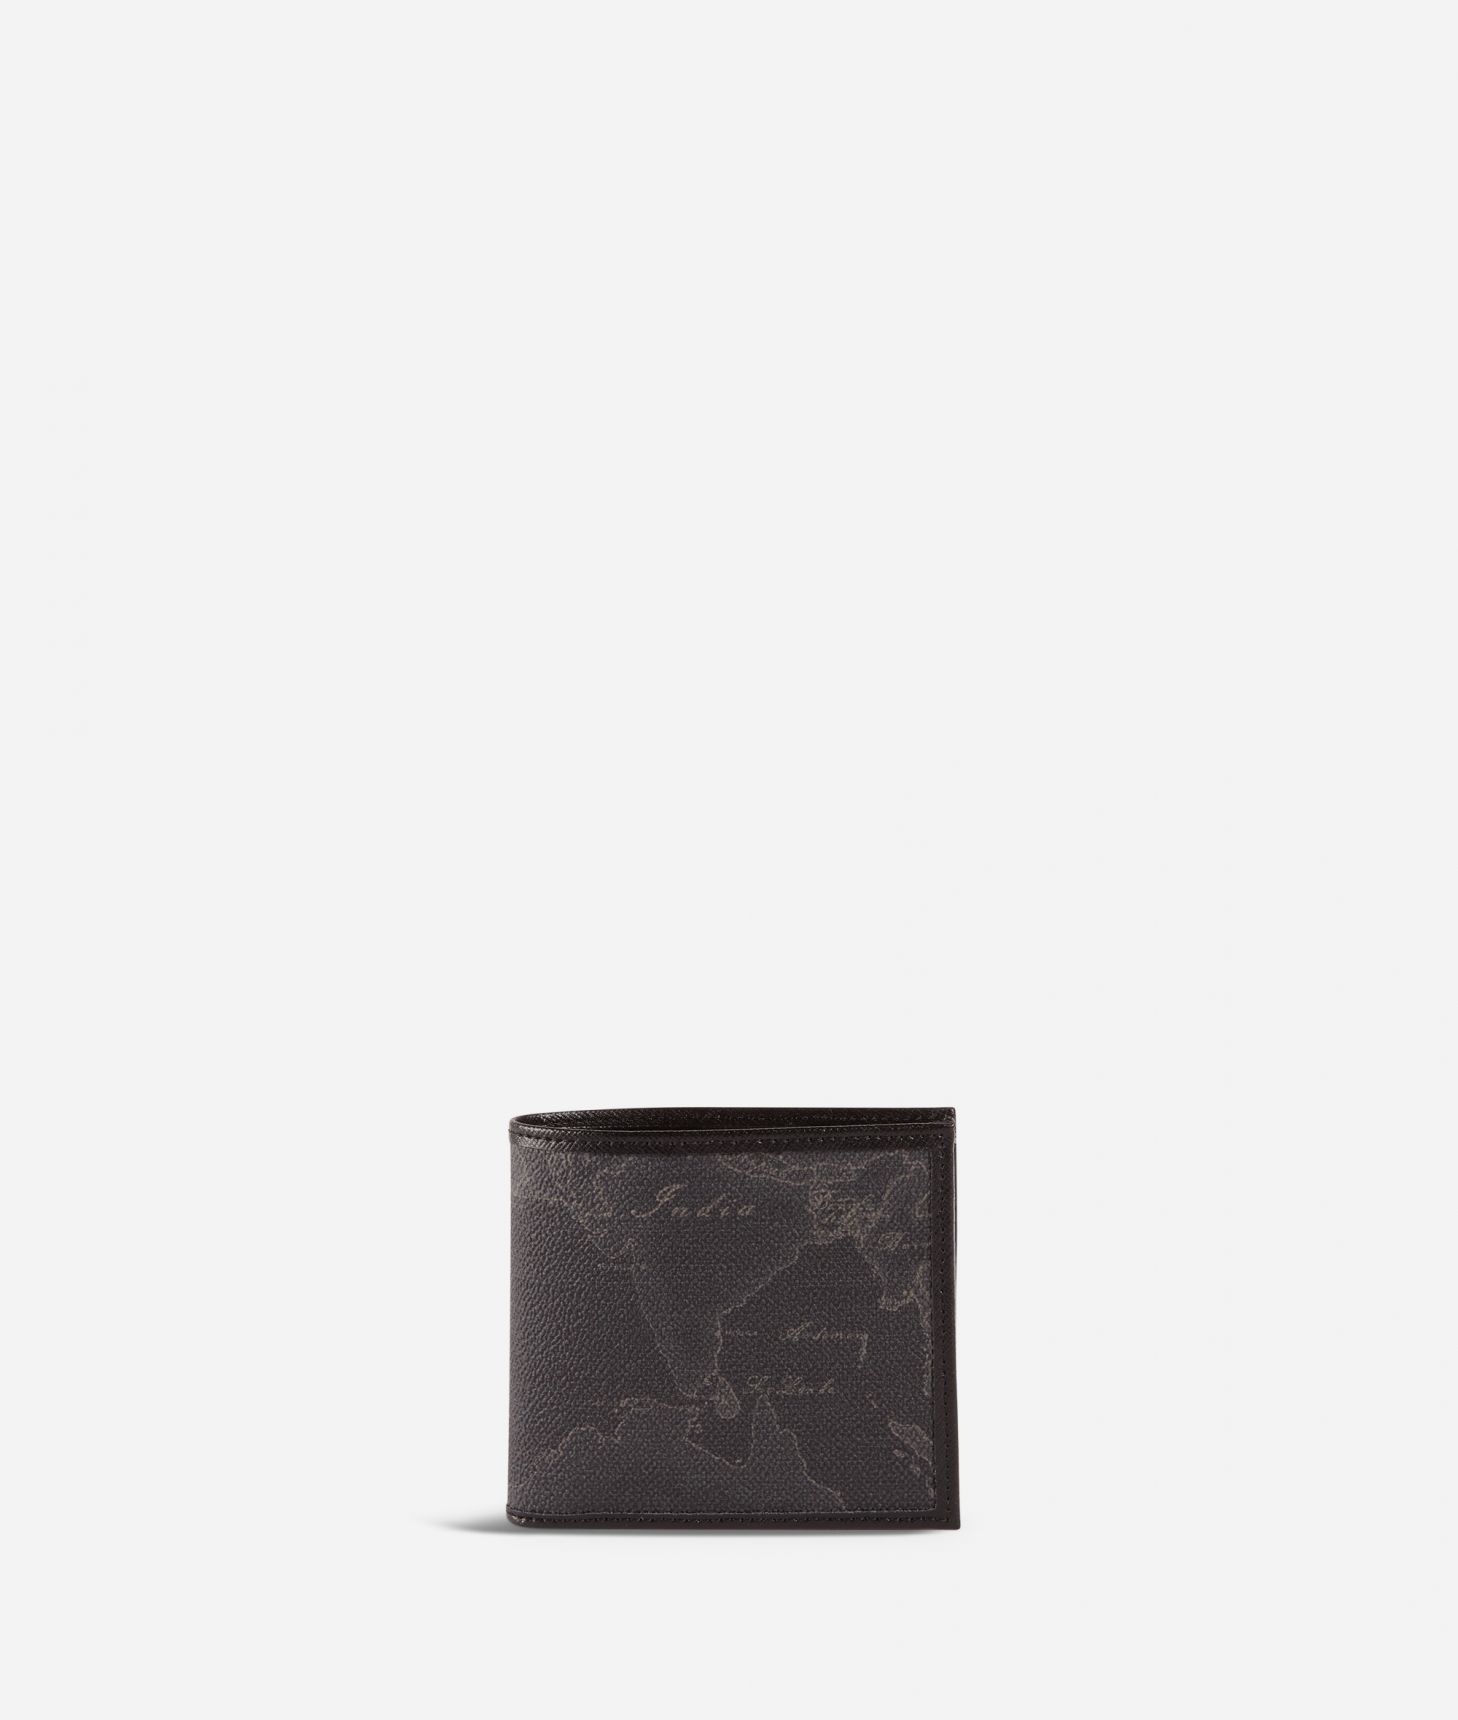 Geo Black small wallet black,front